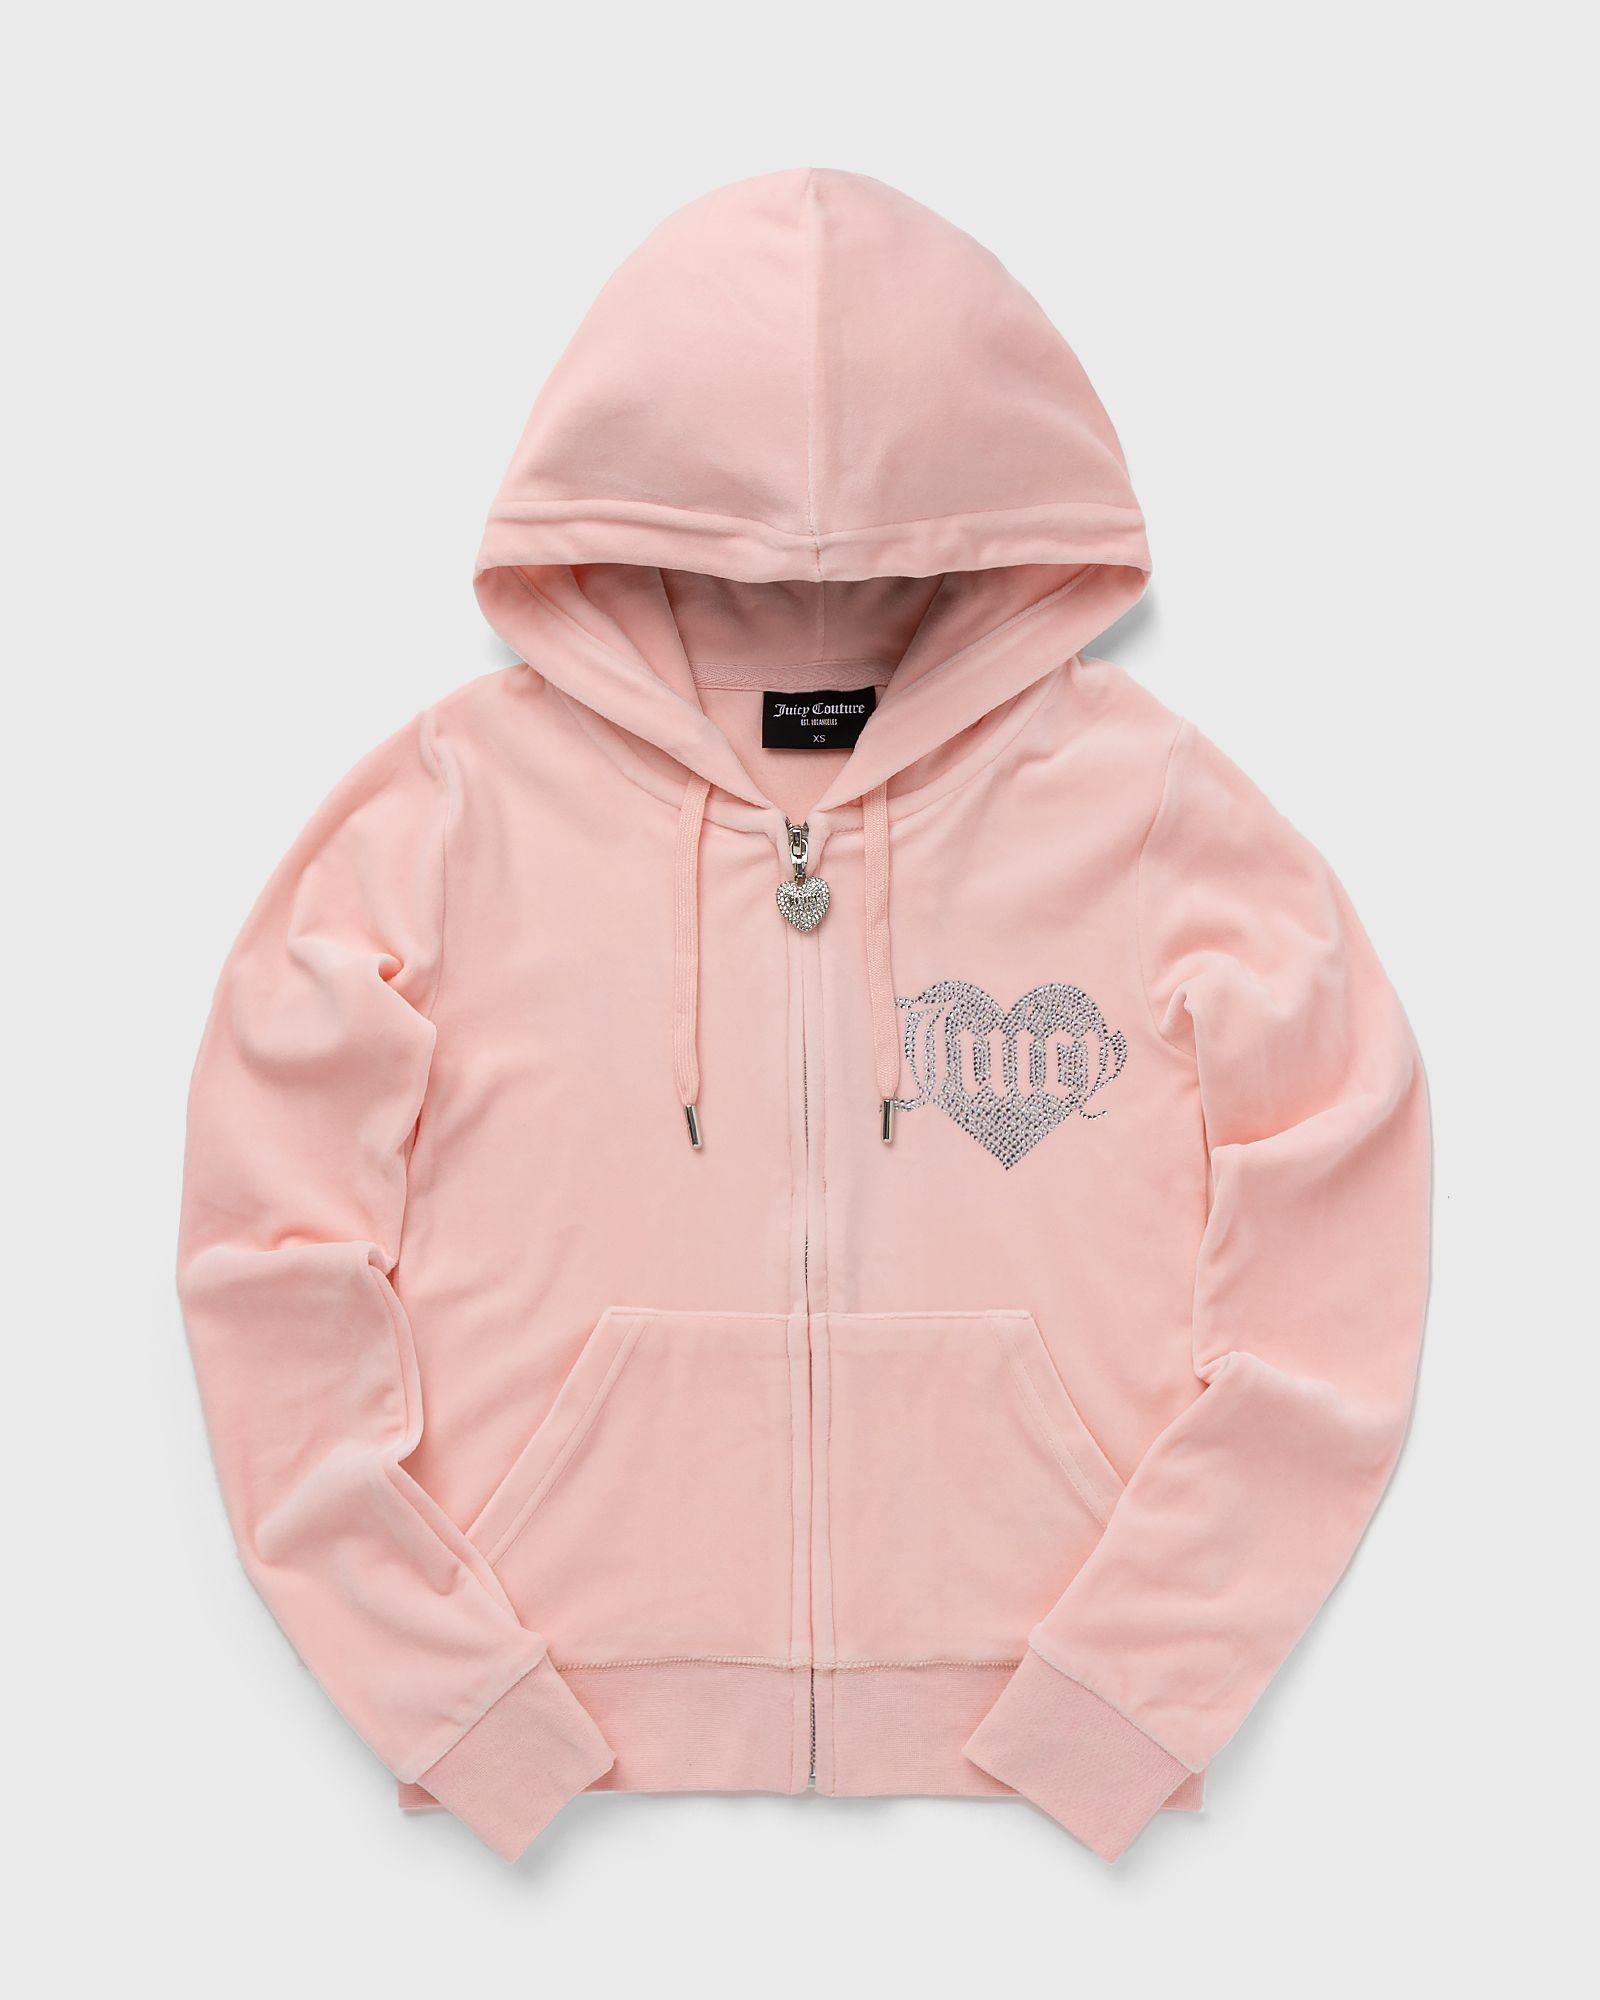 Juicy Couture - velour hoodie with heart diamante women hoodies|zippers pink in größe:xs